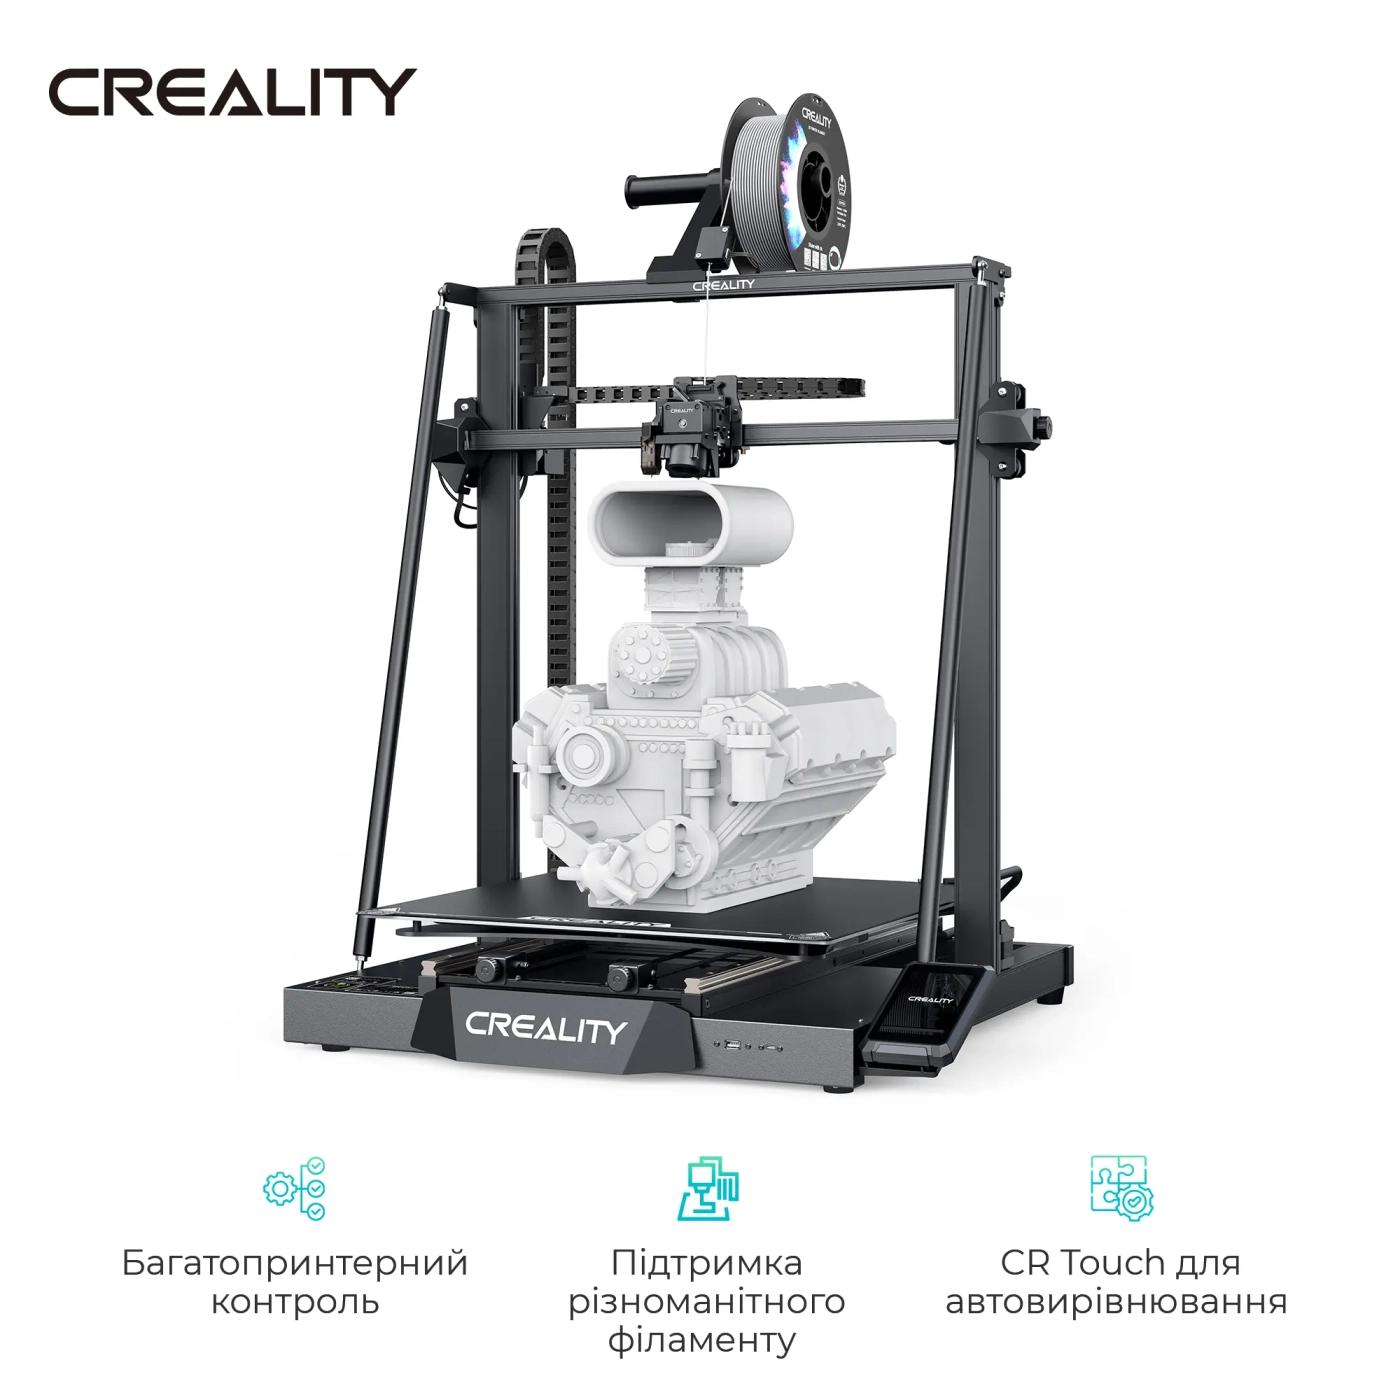 Купить 3D-принтер Creality CR-M4 - фото 3